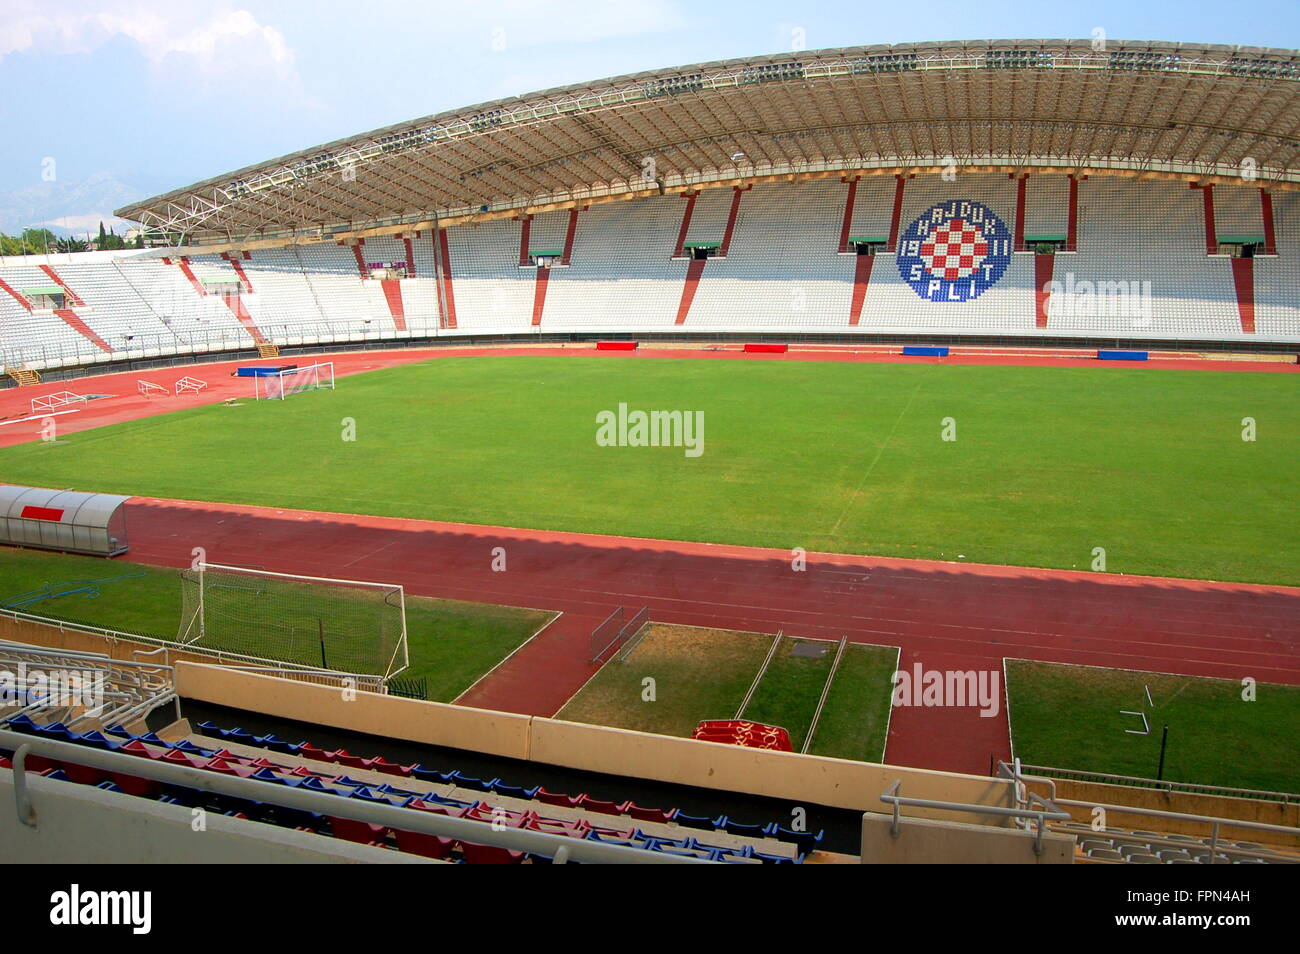 HNK Hajduk Split - Wikidata